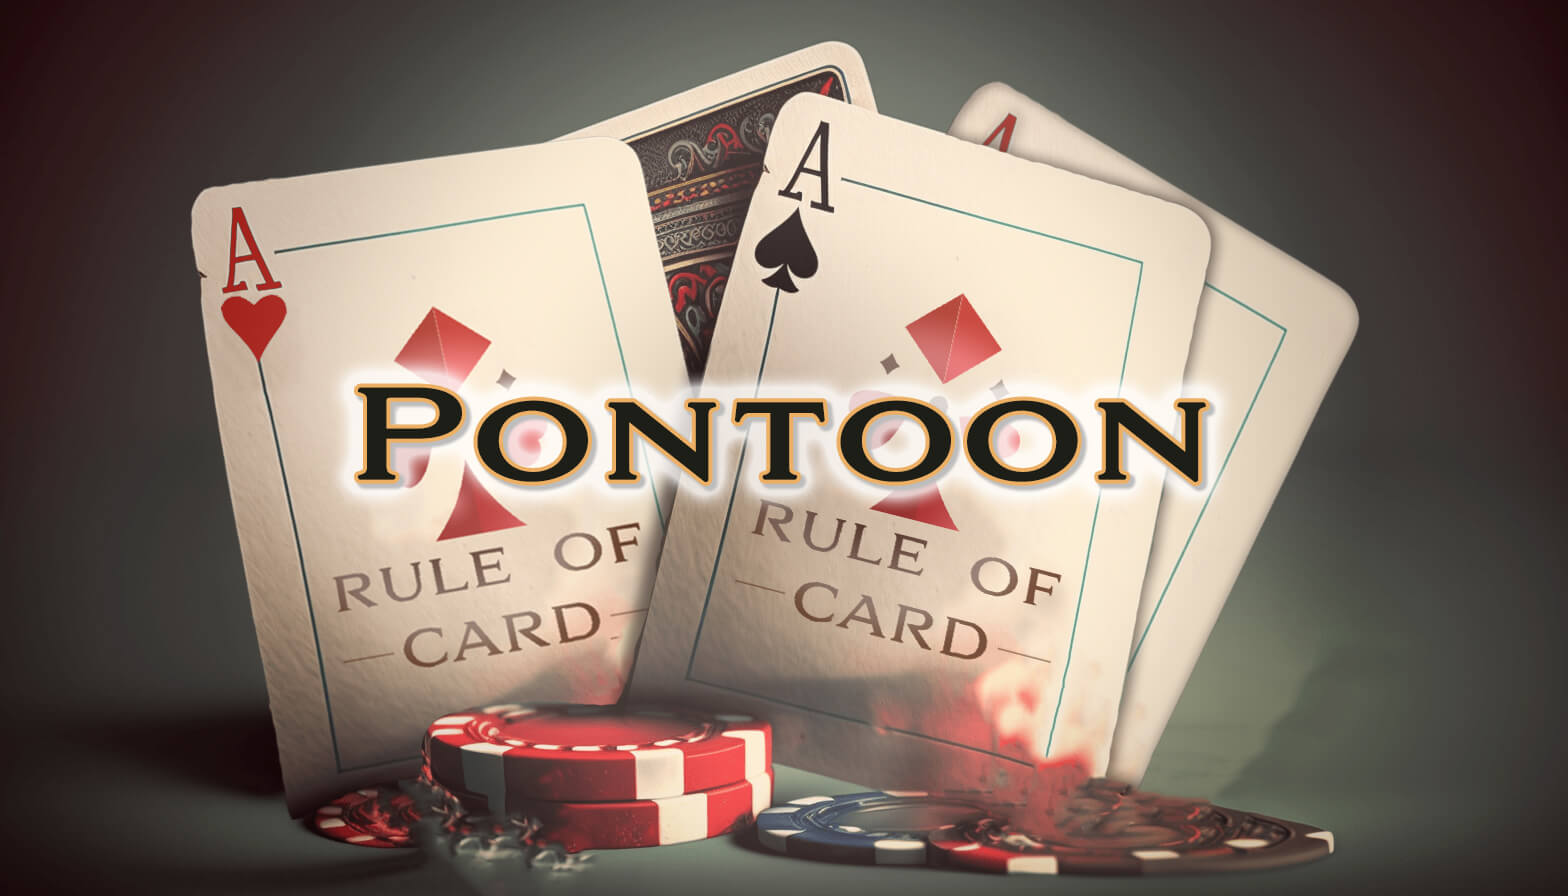 Playing the card game Pontoon